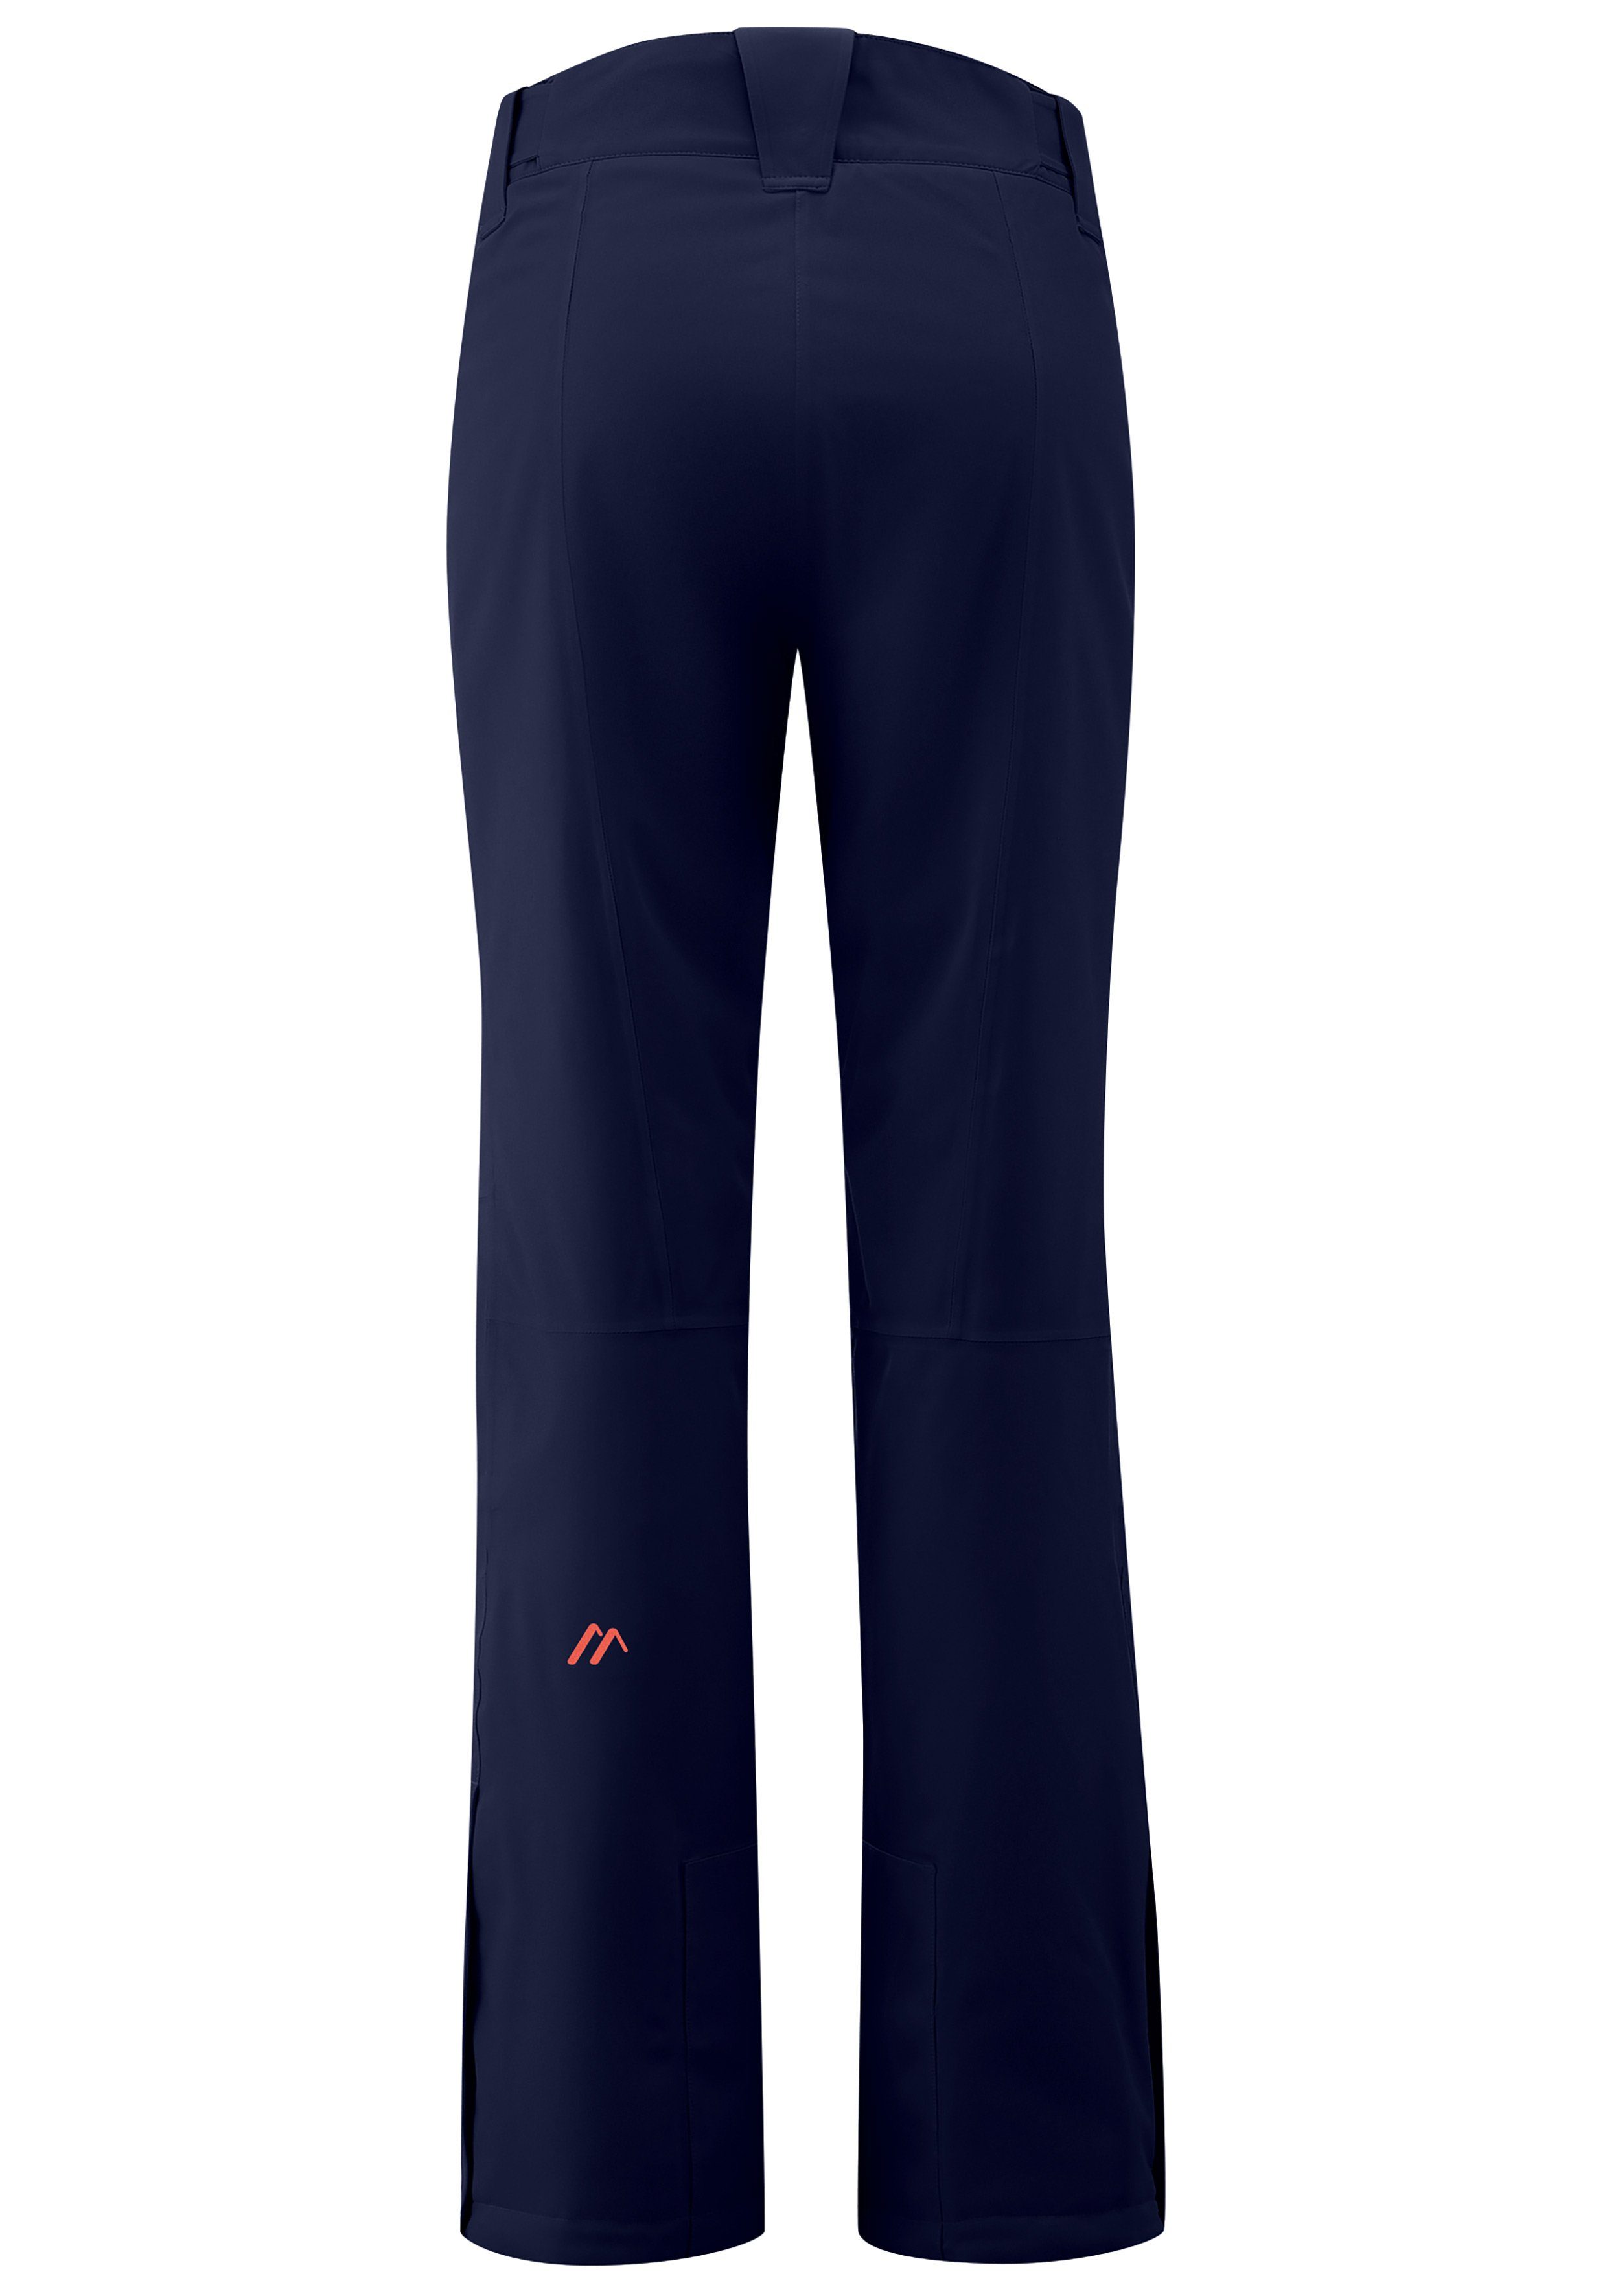 Feminin, sportliche Silhouette Sports Maier Coral schlanker in Skihose Pants Skihose dunkelblau